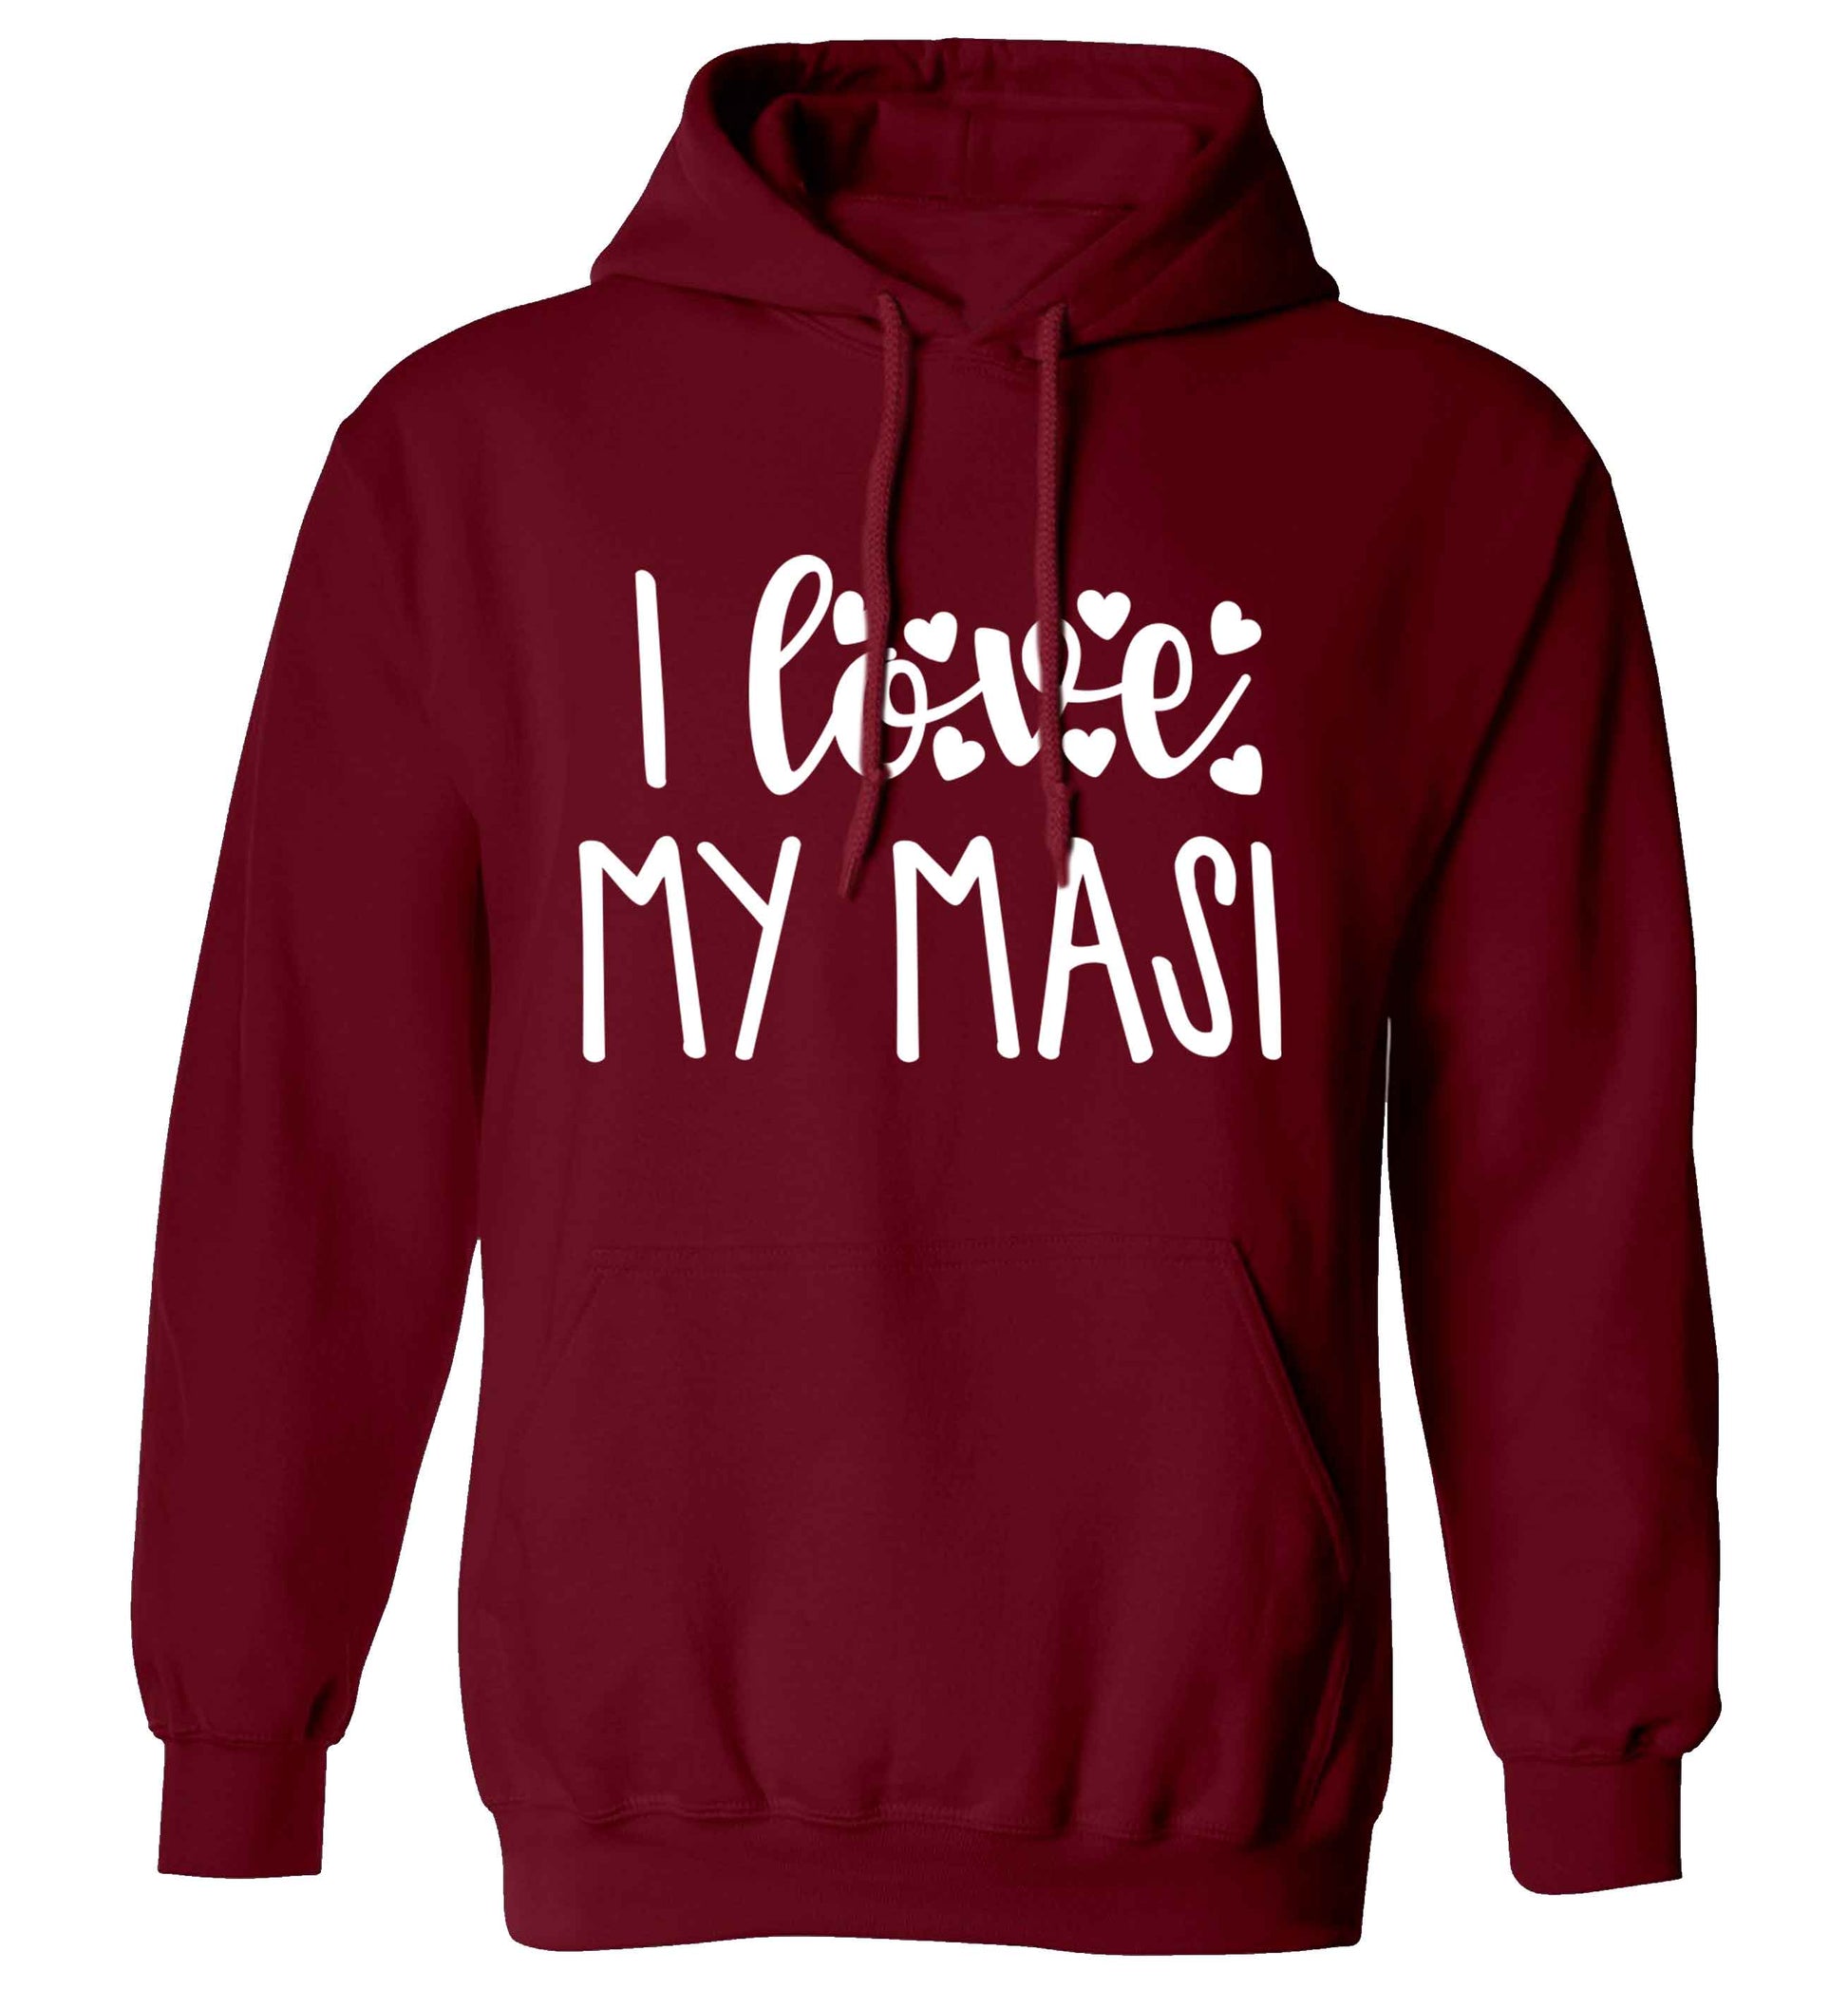 I love my masi adults unisex maroon hoodie 2XL